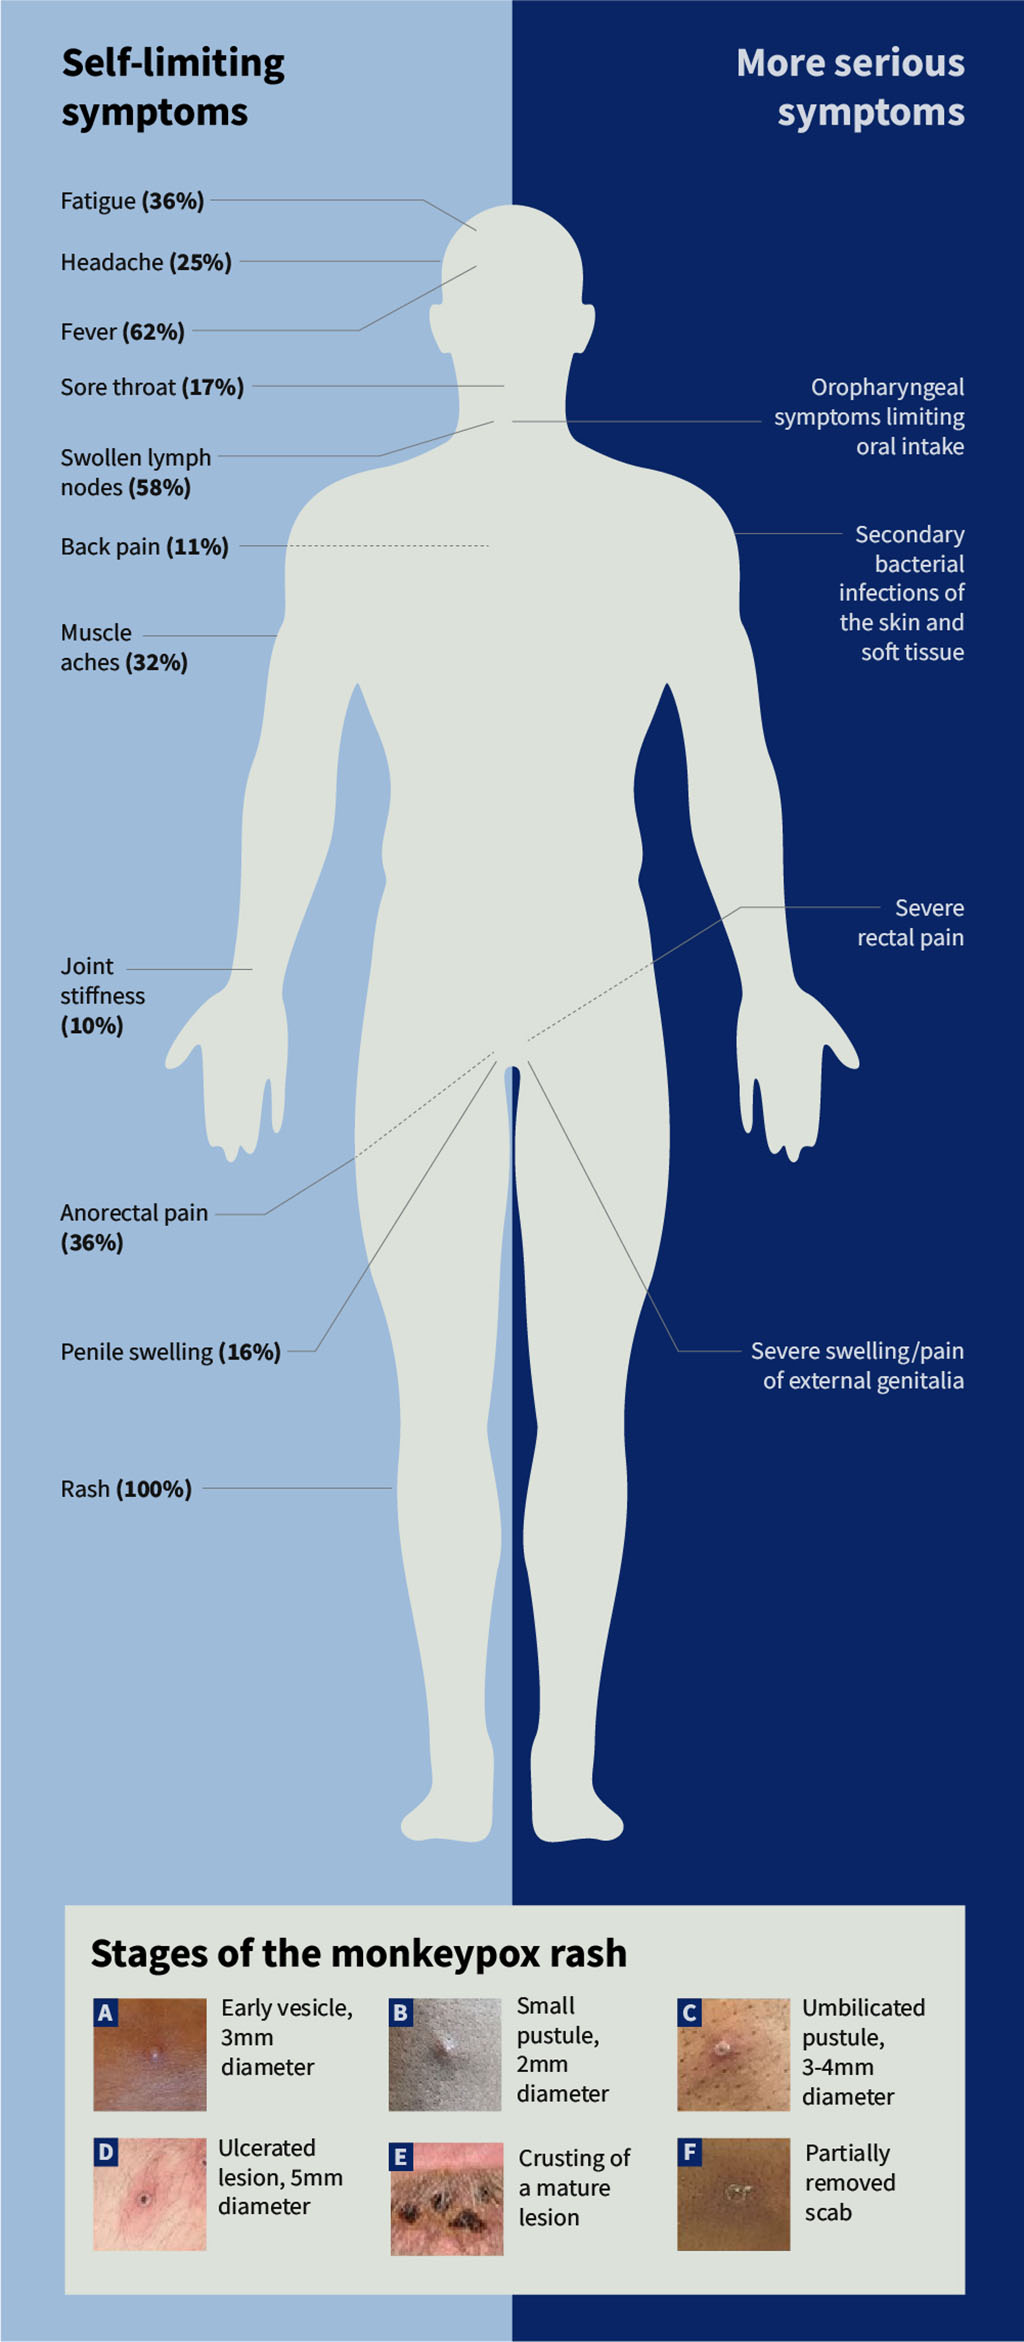 Figure 2: Monkeypox symptoms